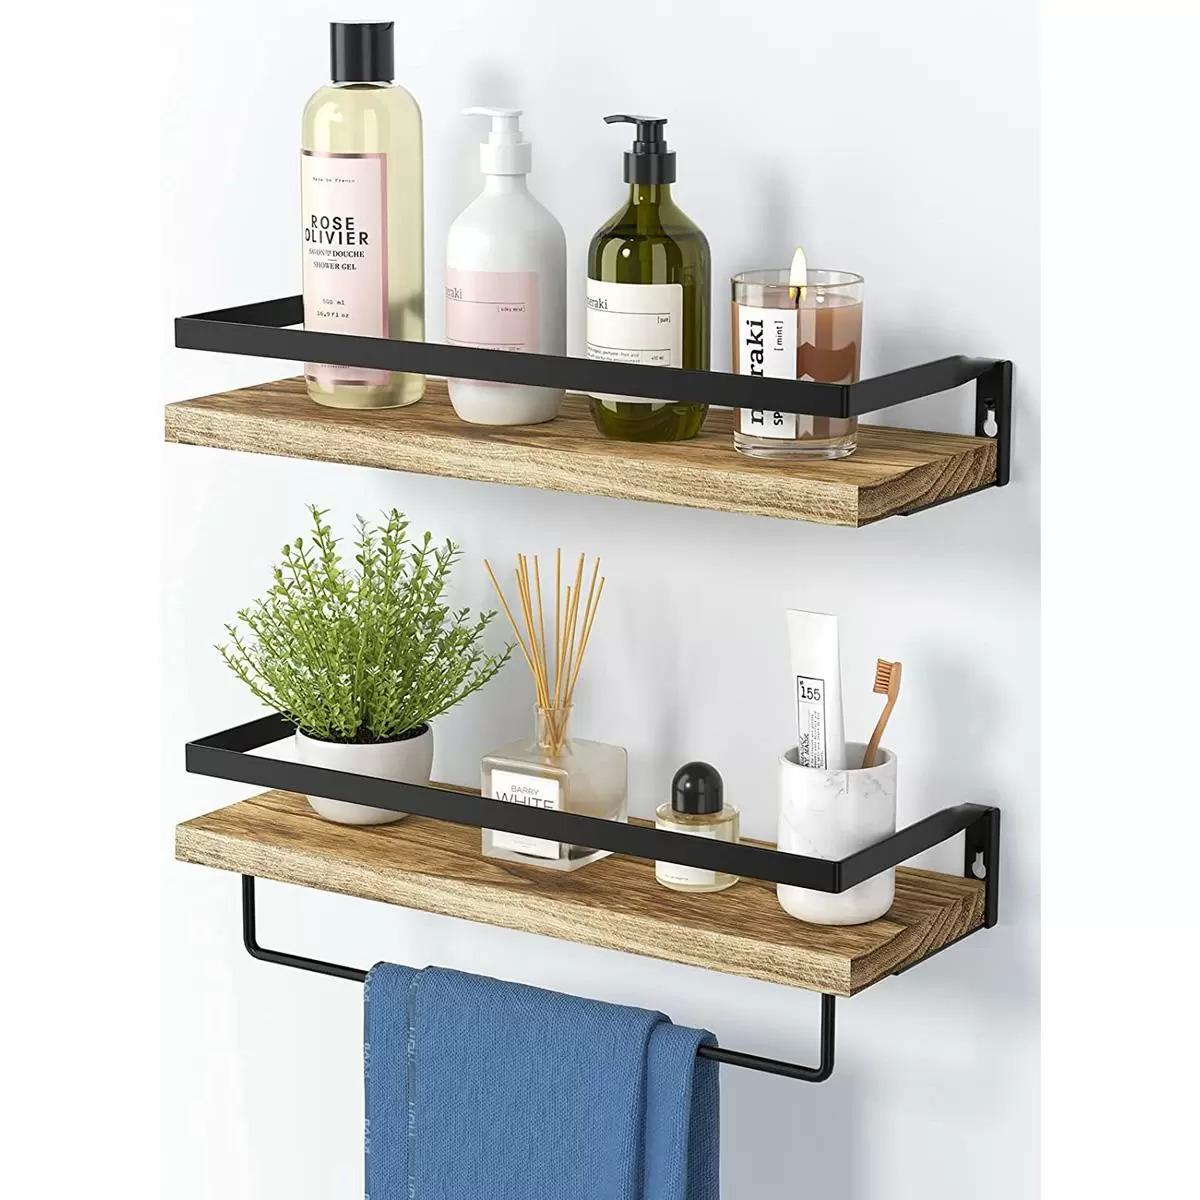 Amada Wood Wall Shelves with Metal Towel Bar for $9.85